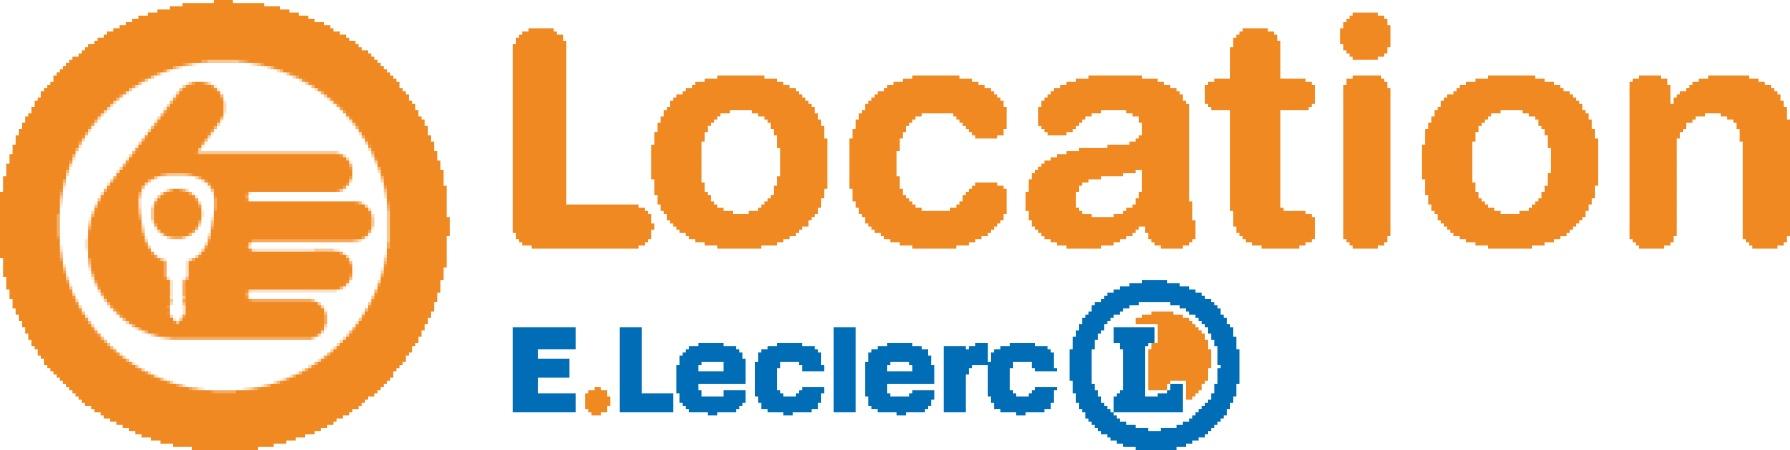 E.leclerc Location Chécy